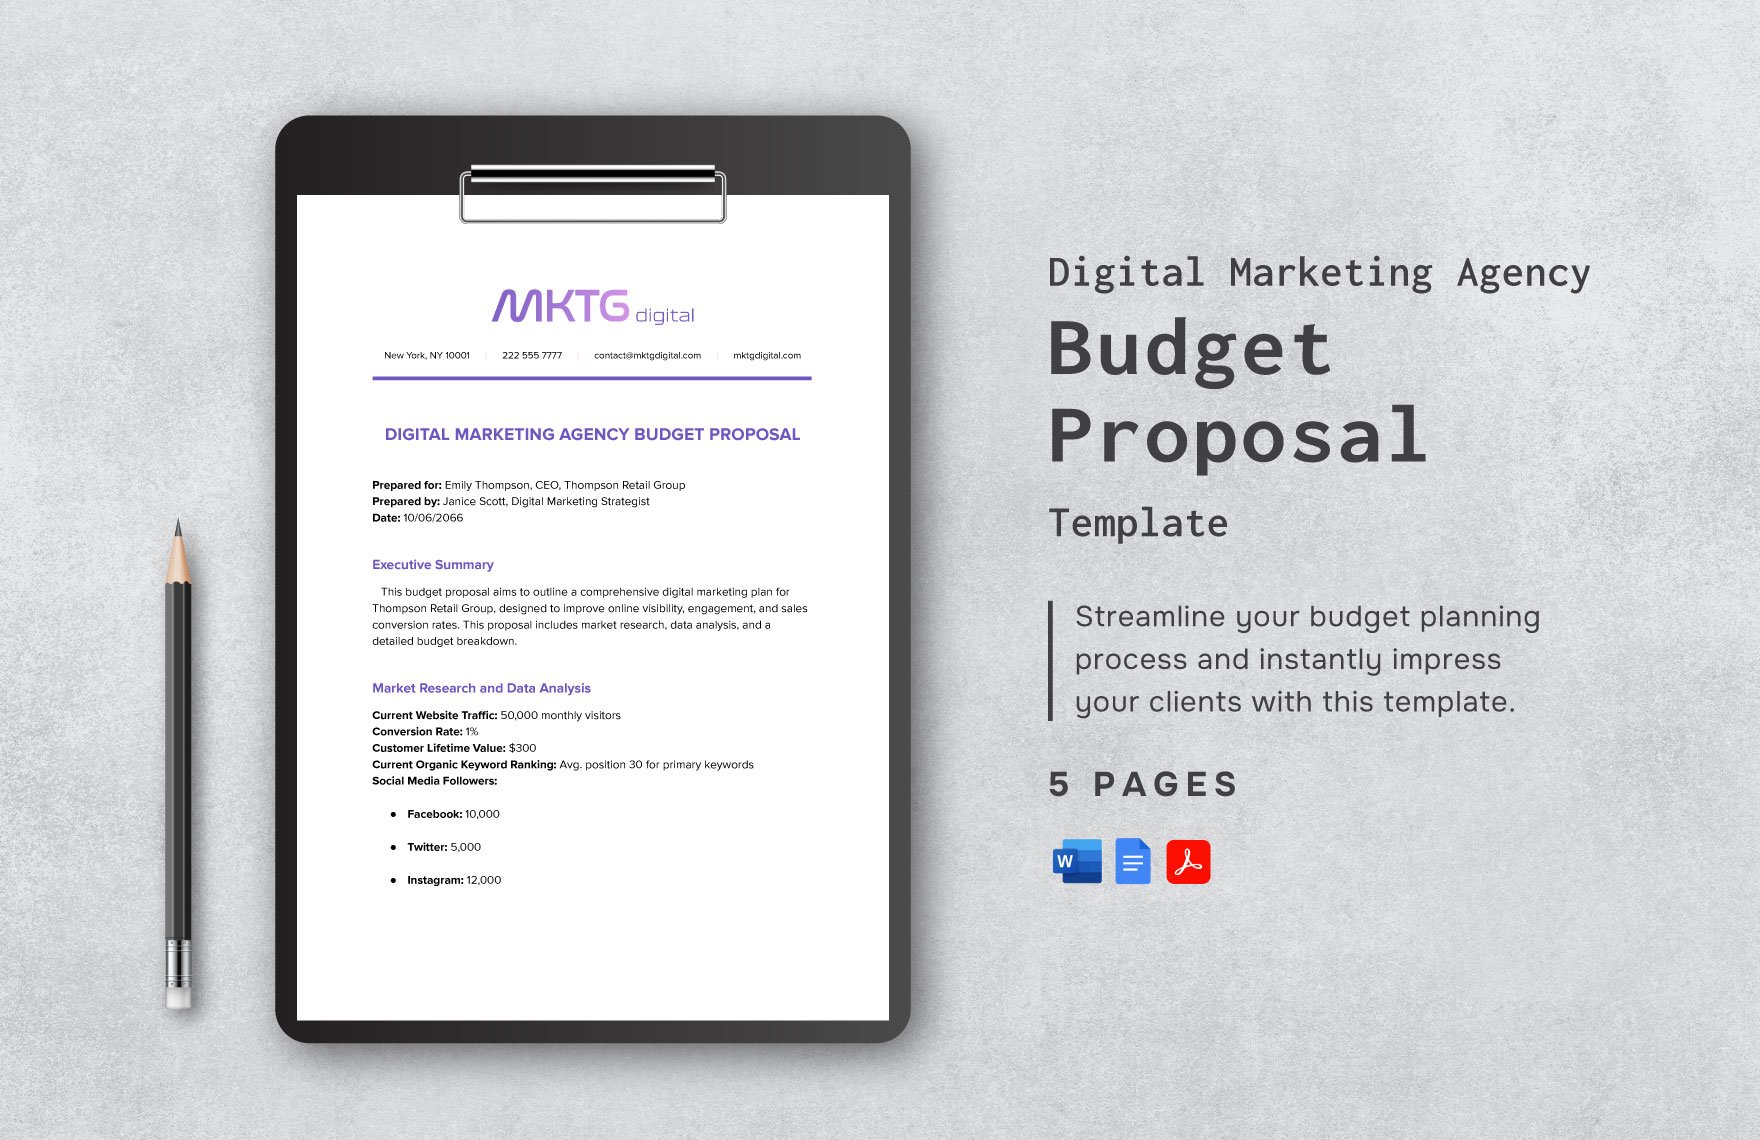 Digital Marketing Agency Budget Proposal Template